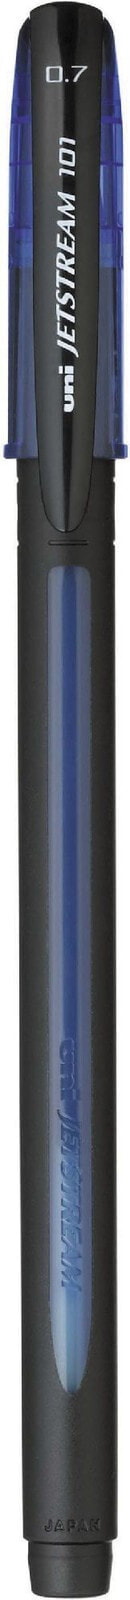 Uni Mitsubishi Pencil Długopis SX101 0.35MM Niebieski